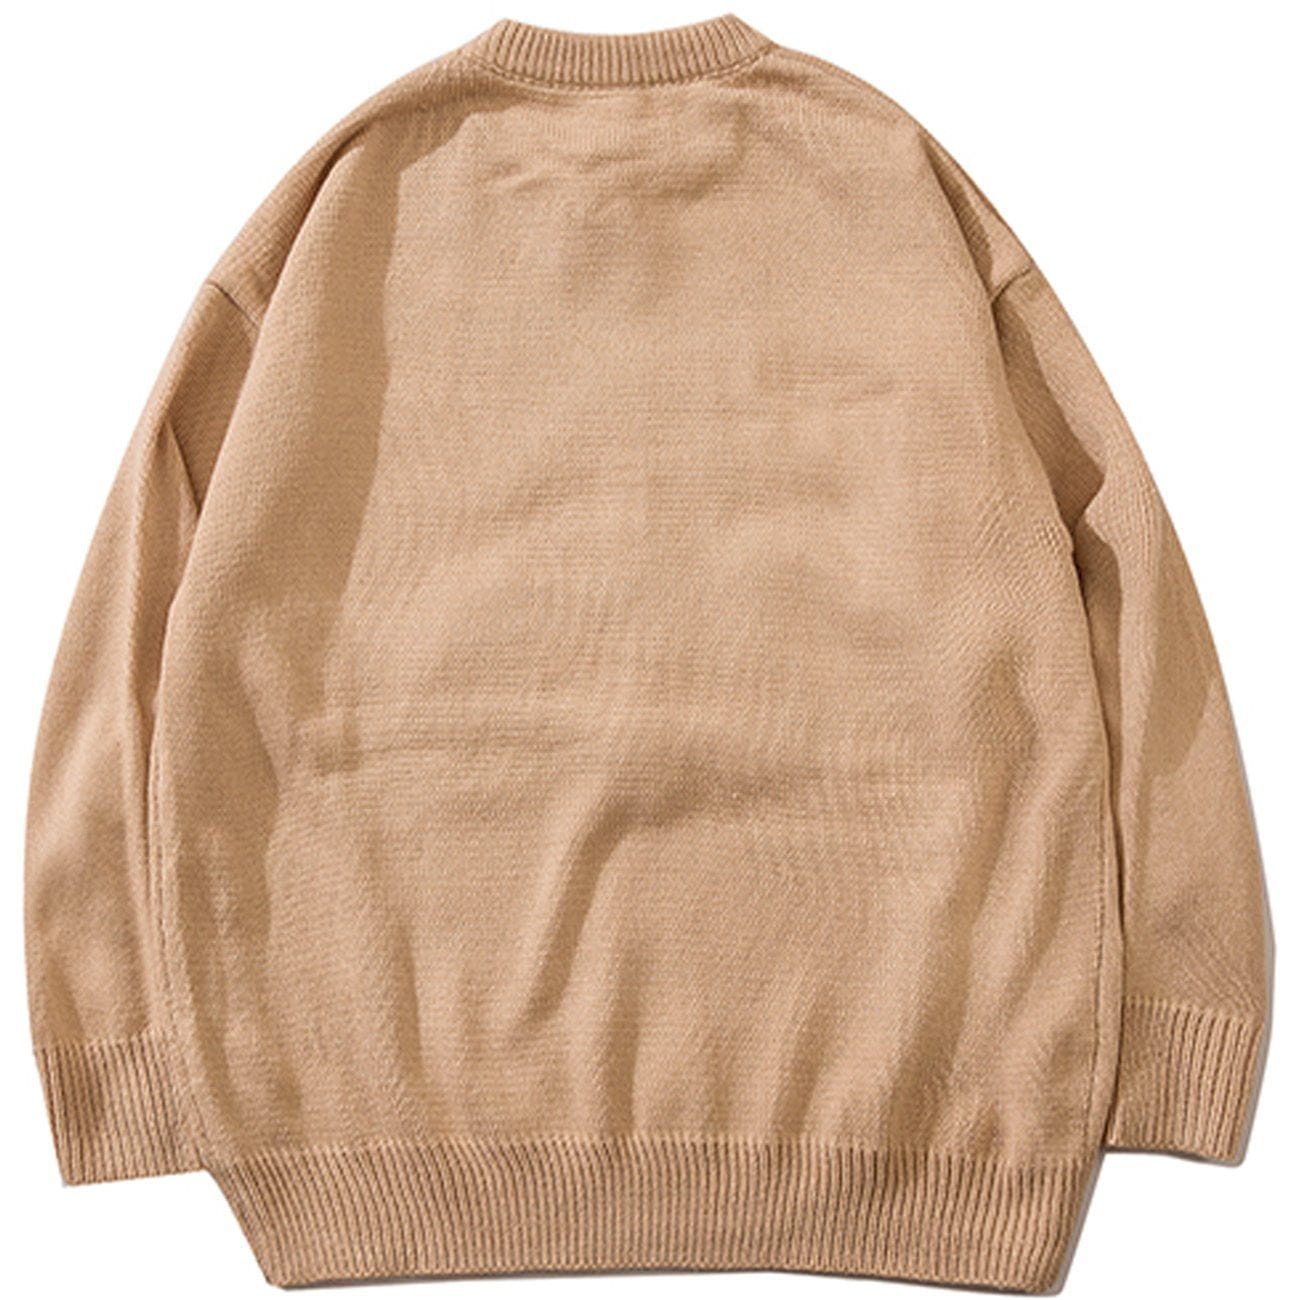 Bear Embroidery Knit Sweater Streetwear Brand Techwear Combat Tactical YUGEN THEORY